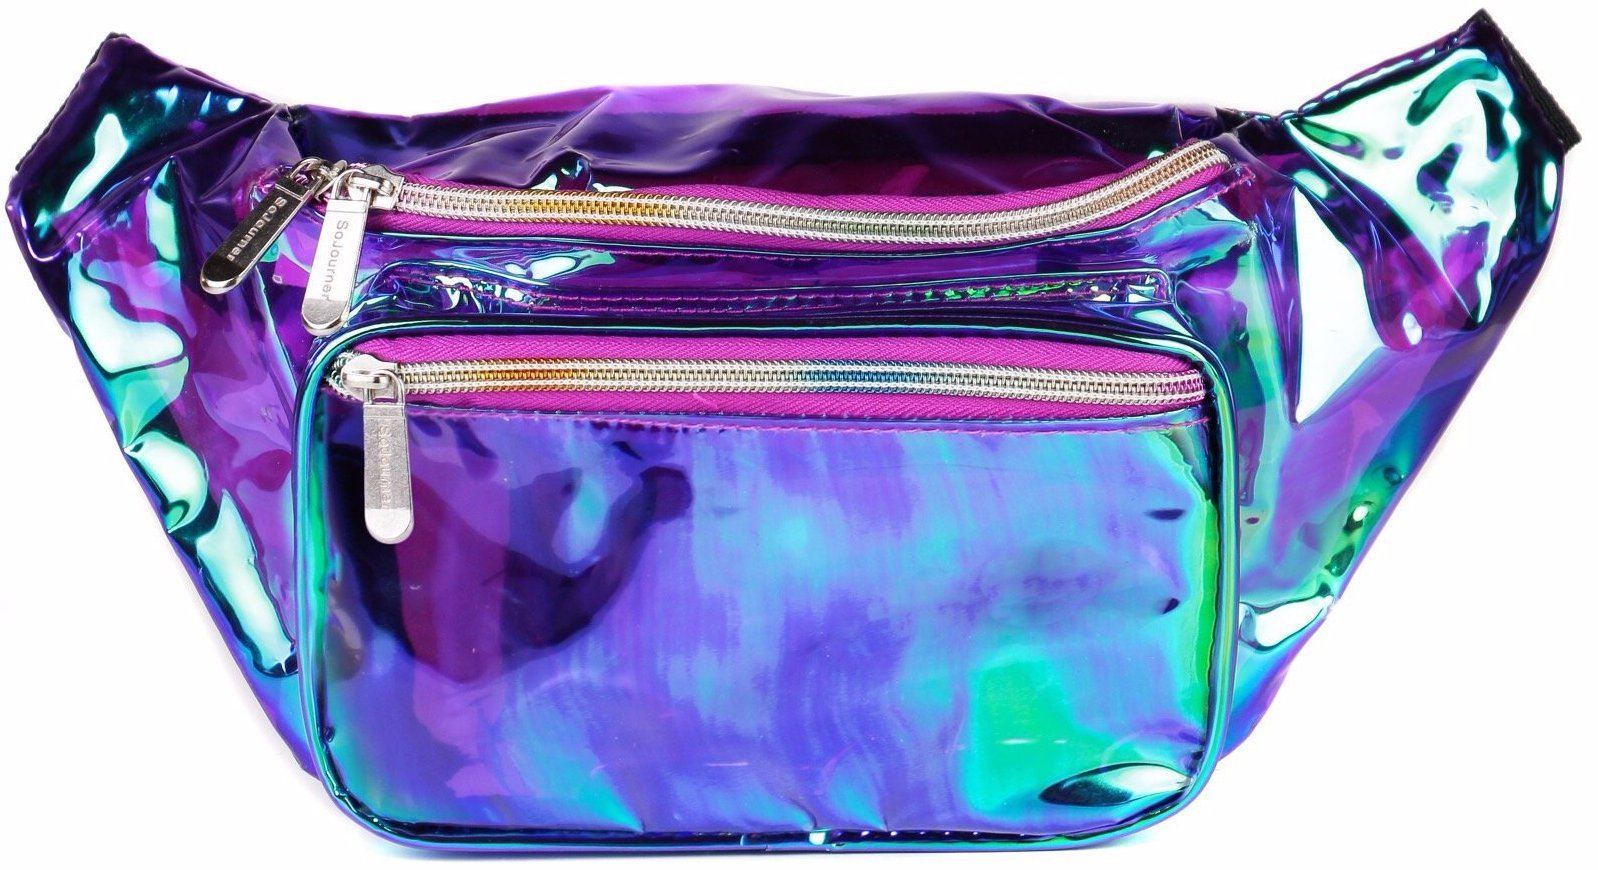 Fanny Pack Purple Transparent Fanny Pack - SoJourner Bags